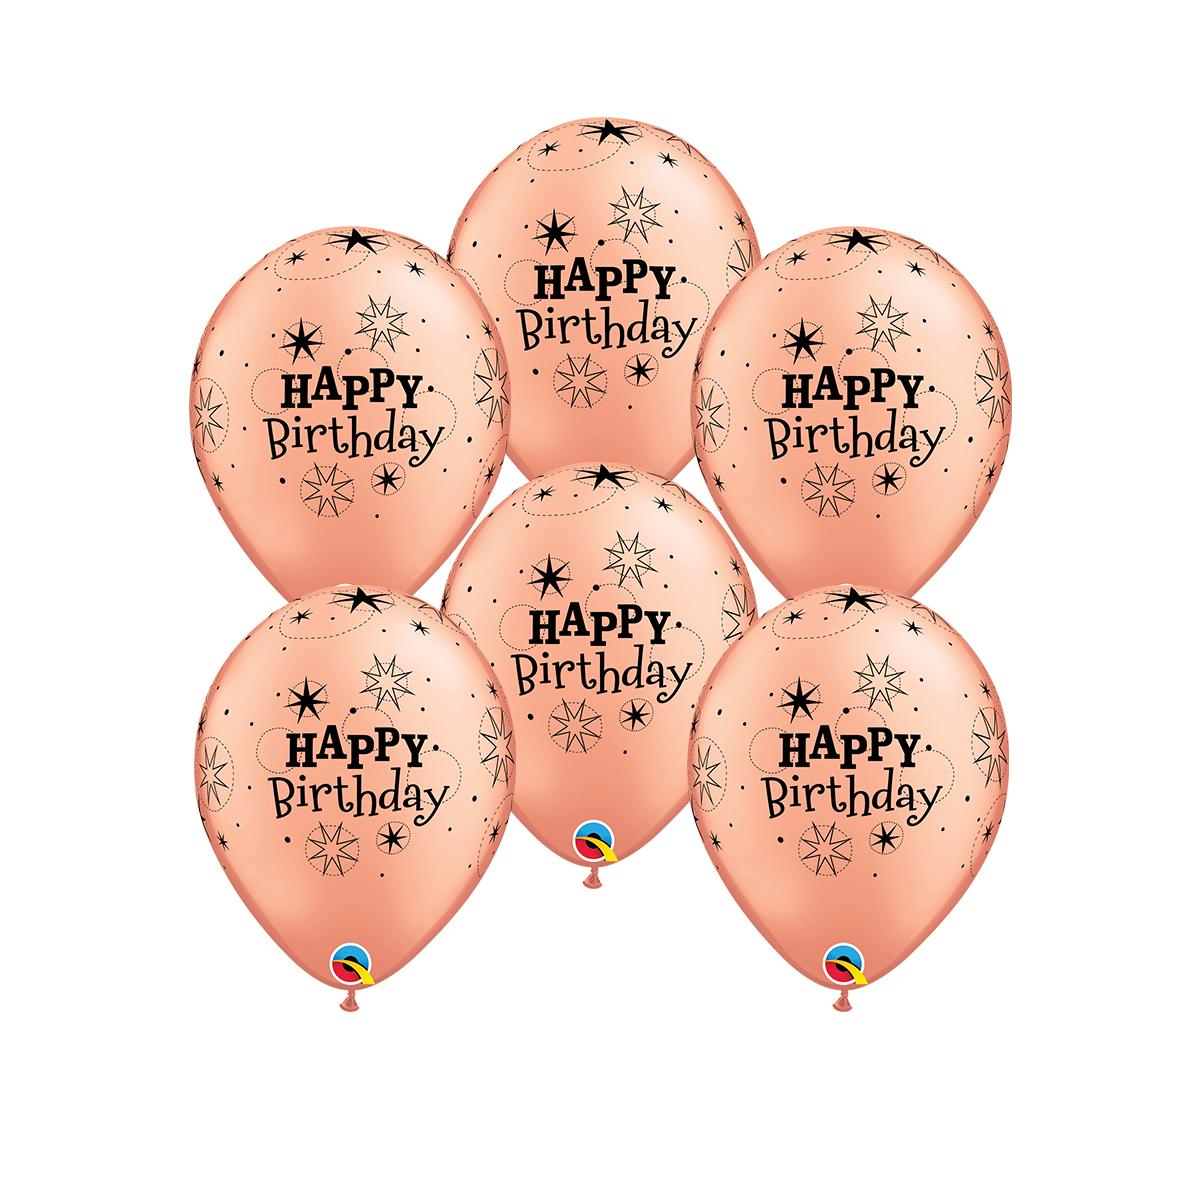 Image Of 6 Rose Gold Happy Birthday Latex Balloons